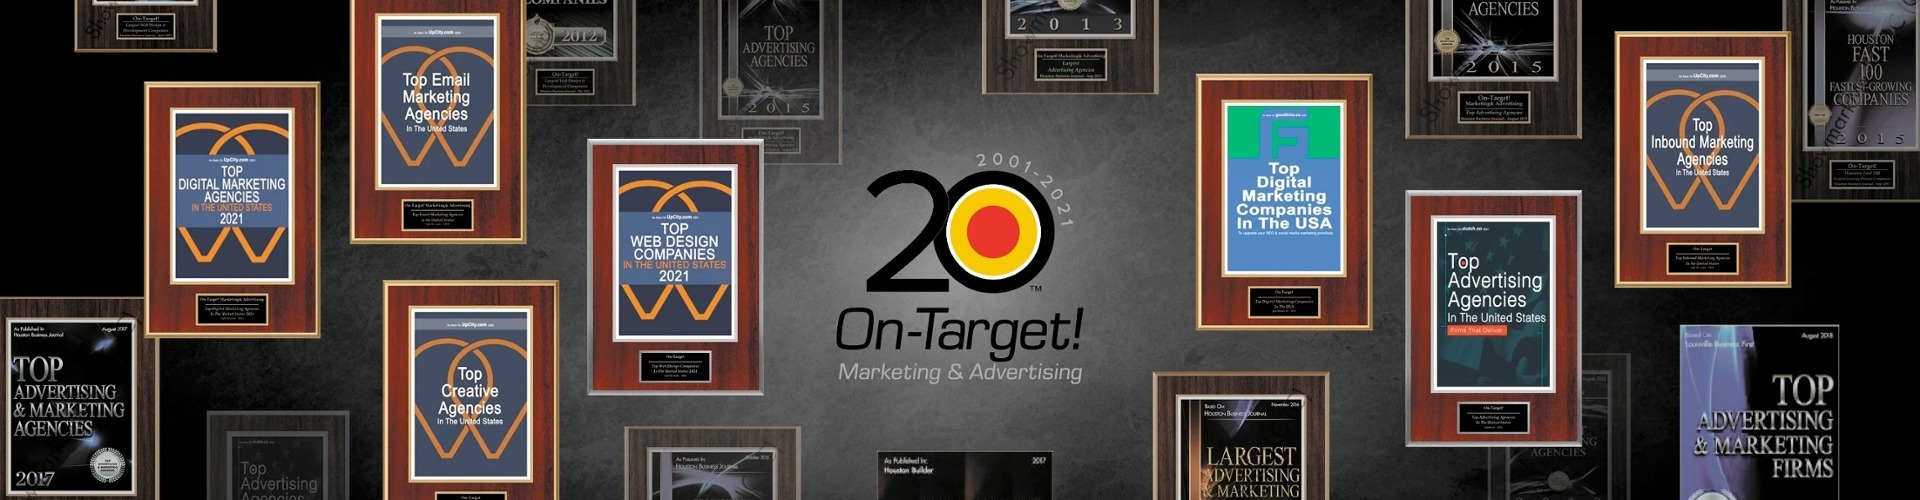 On-Target! Makreting | Digital Marketers In Houston | On-Target Recognized as Top Advertising Agency 